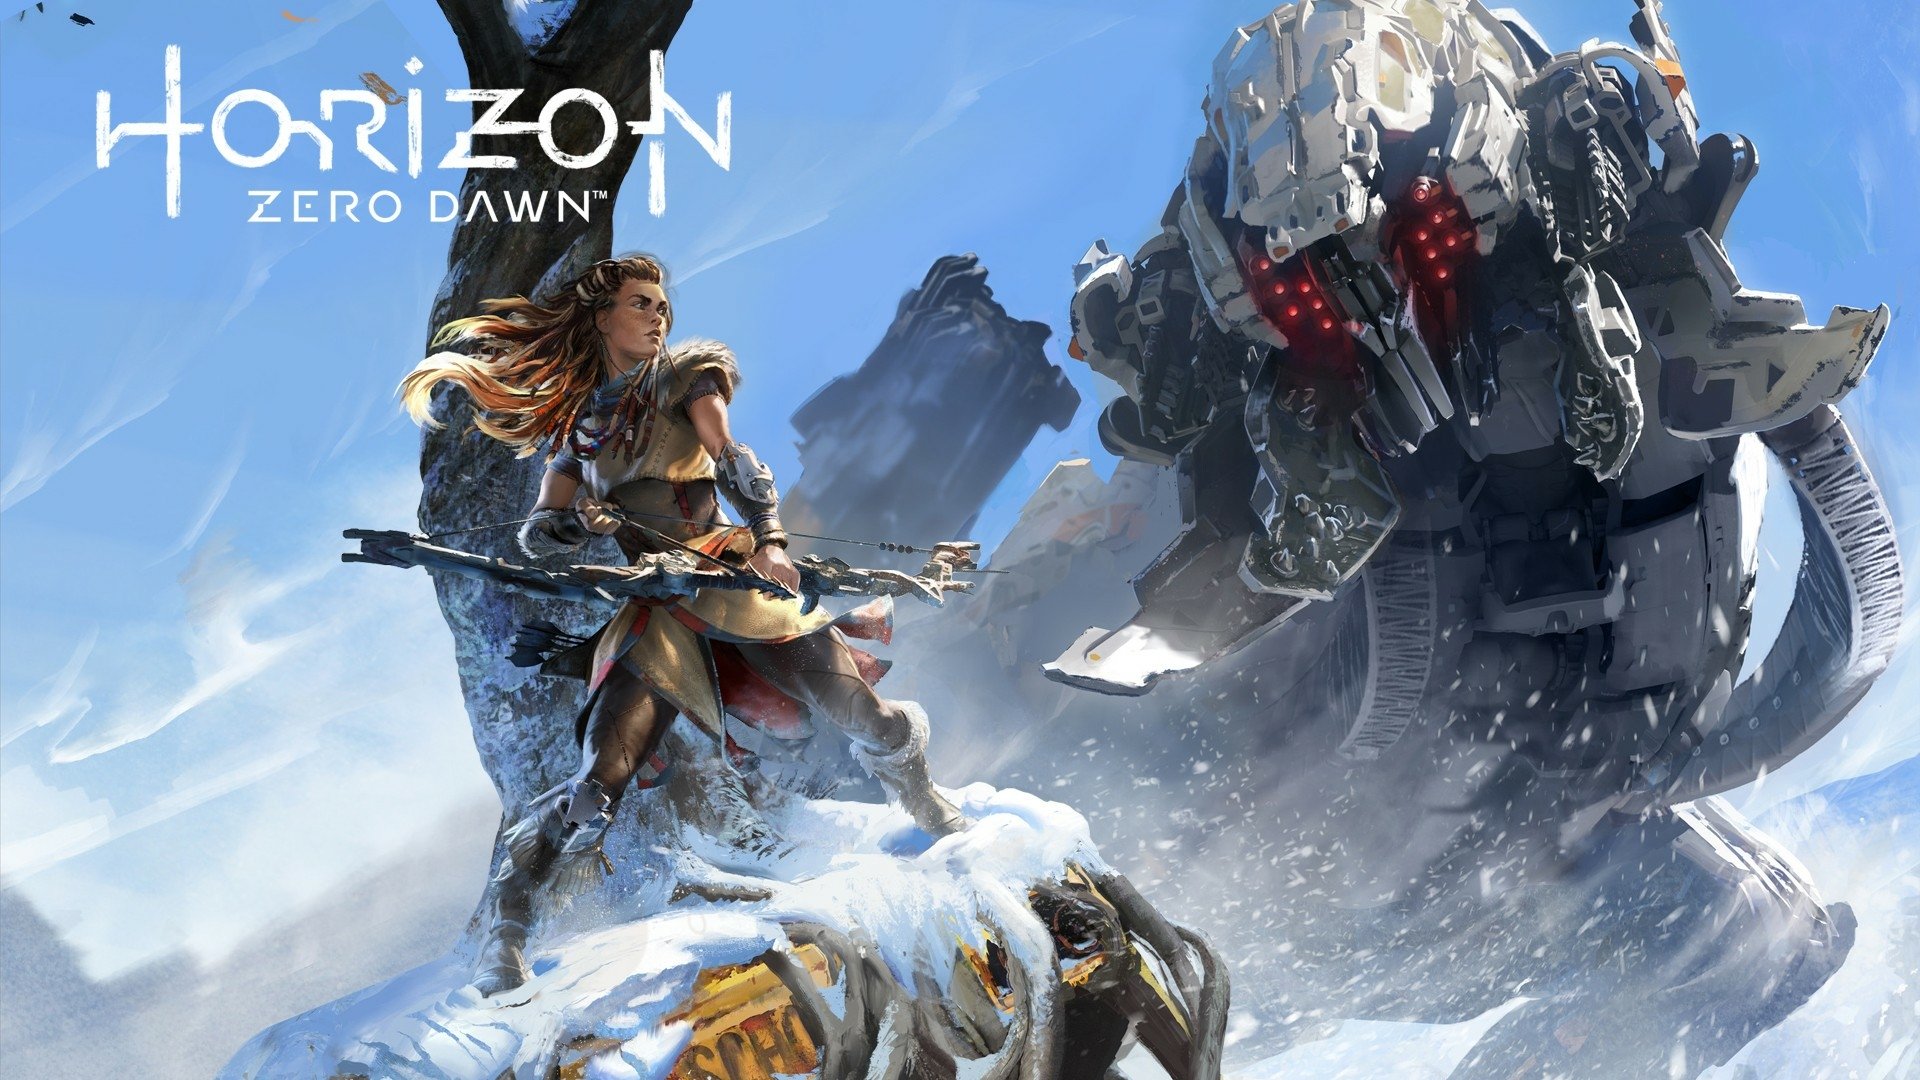 Horizon Zero Dawn review - A gorgeous and gripping apocalyptic adventure